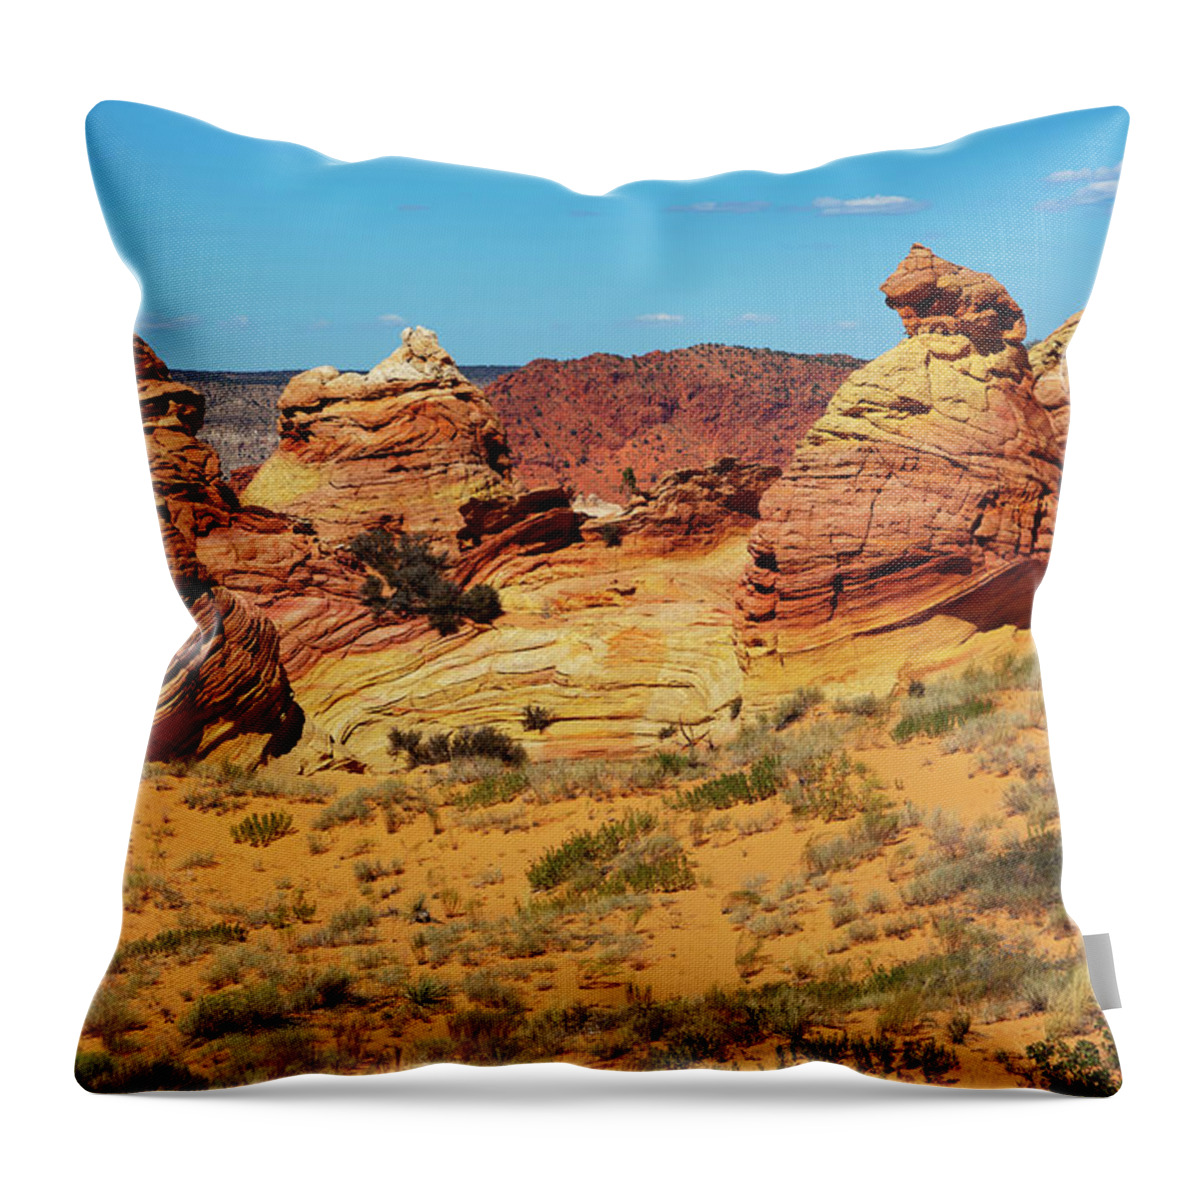 Scenics Throw Pillow featuring the photograph Desert Landscape by Lucynakoch